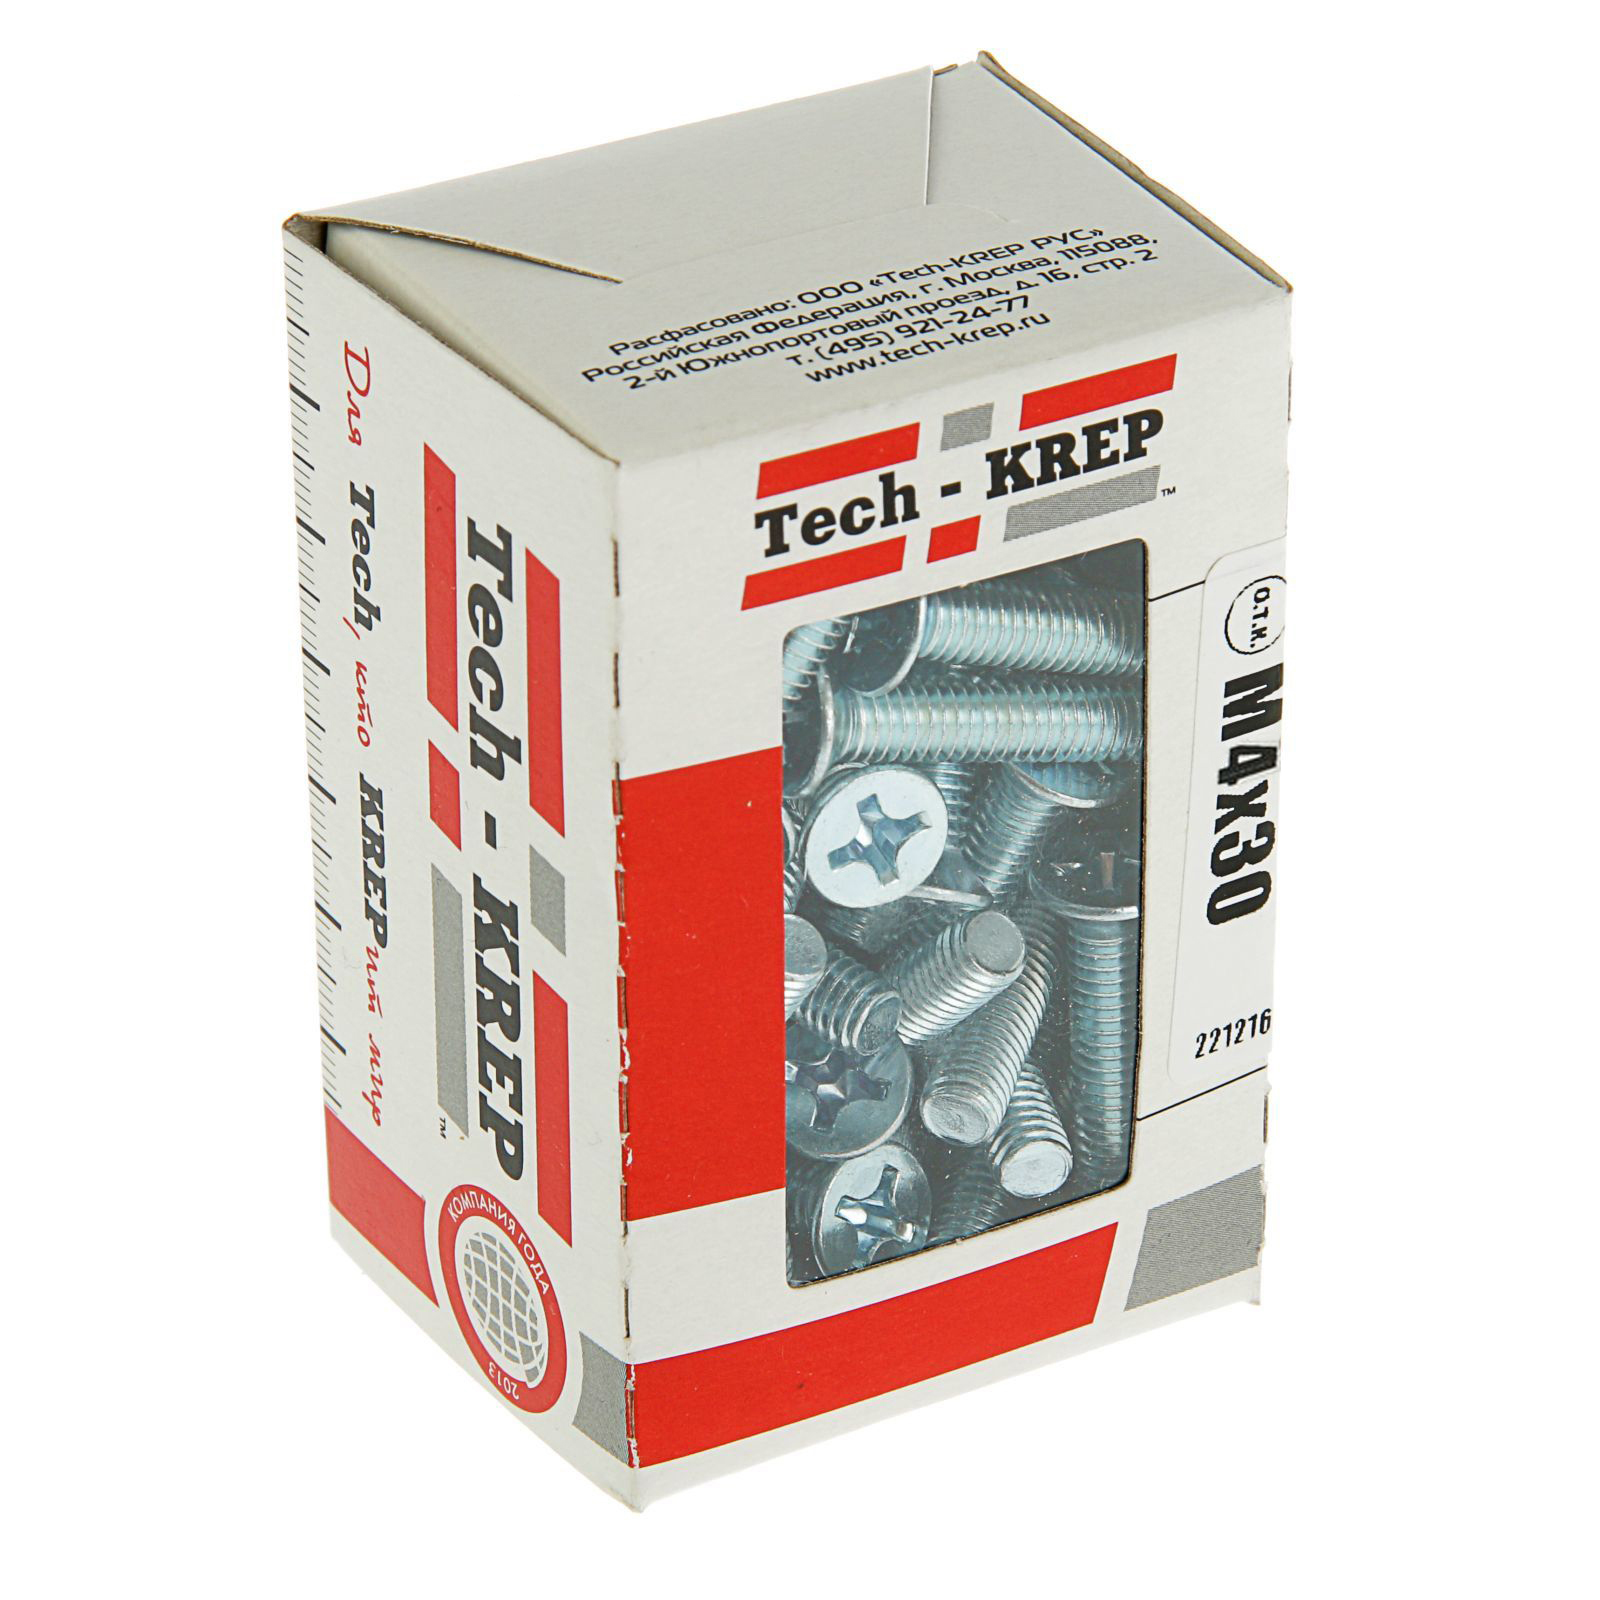 Tech-Krep Винт DIN965 с потайной головкой оцинк. М4х30 (120 шт) - коробка с ок. 105236